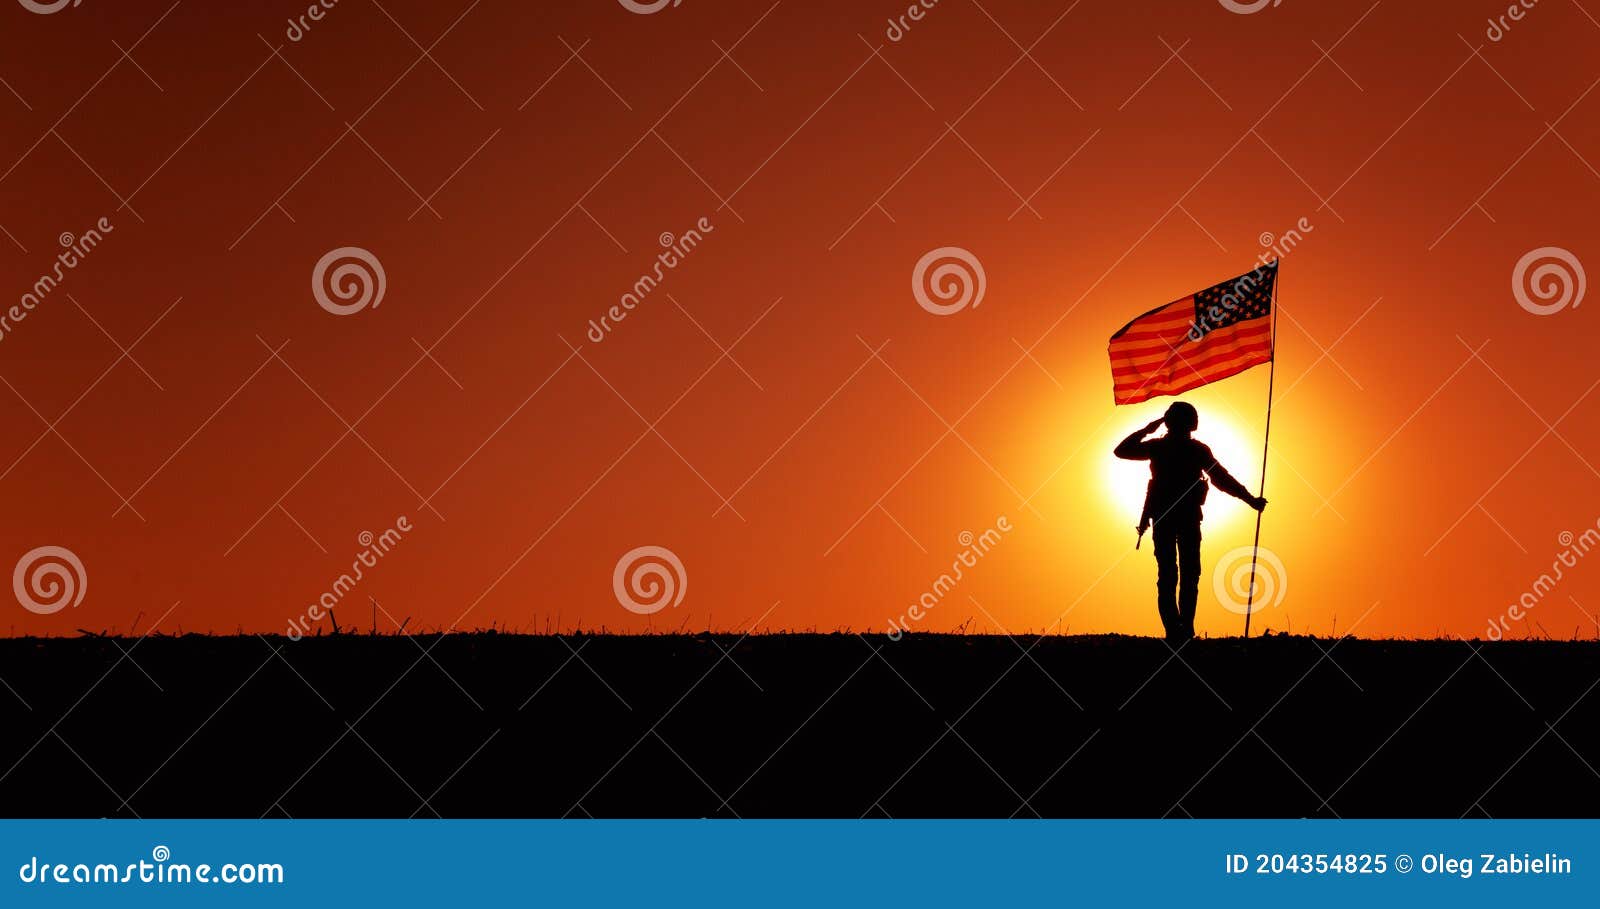 usa soldier with flag saluting on sunset horizon